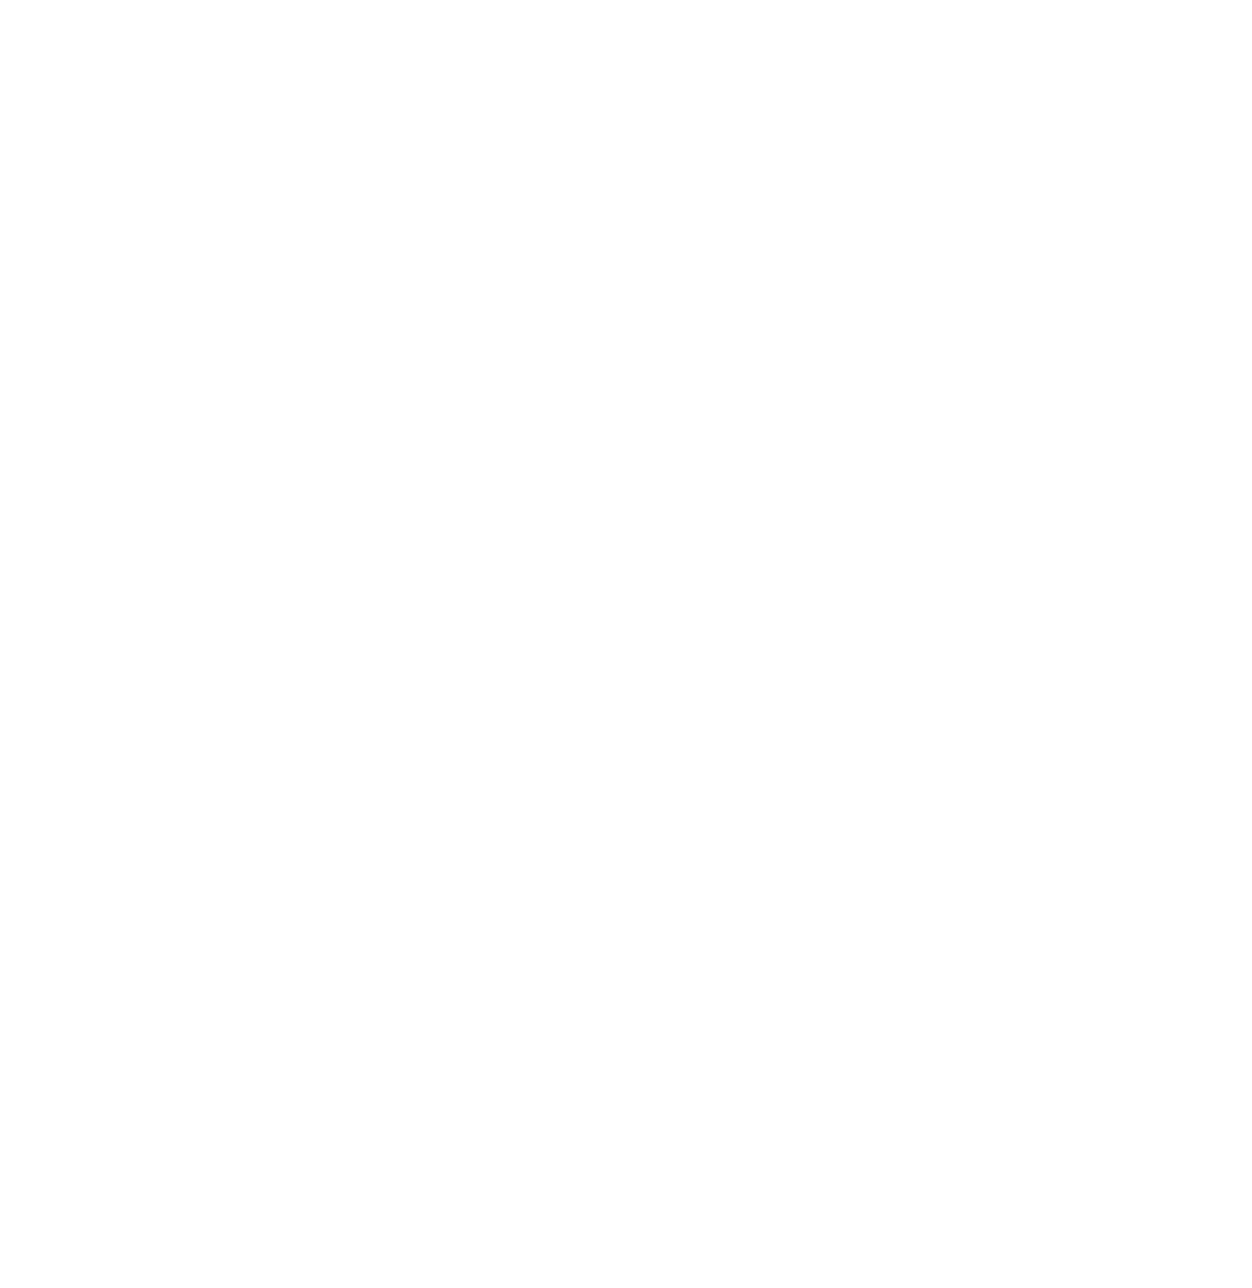 Arboricultural Association Member Benefit